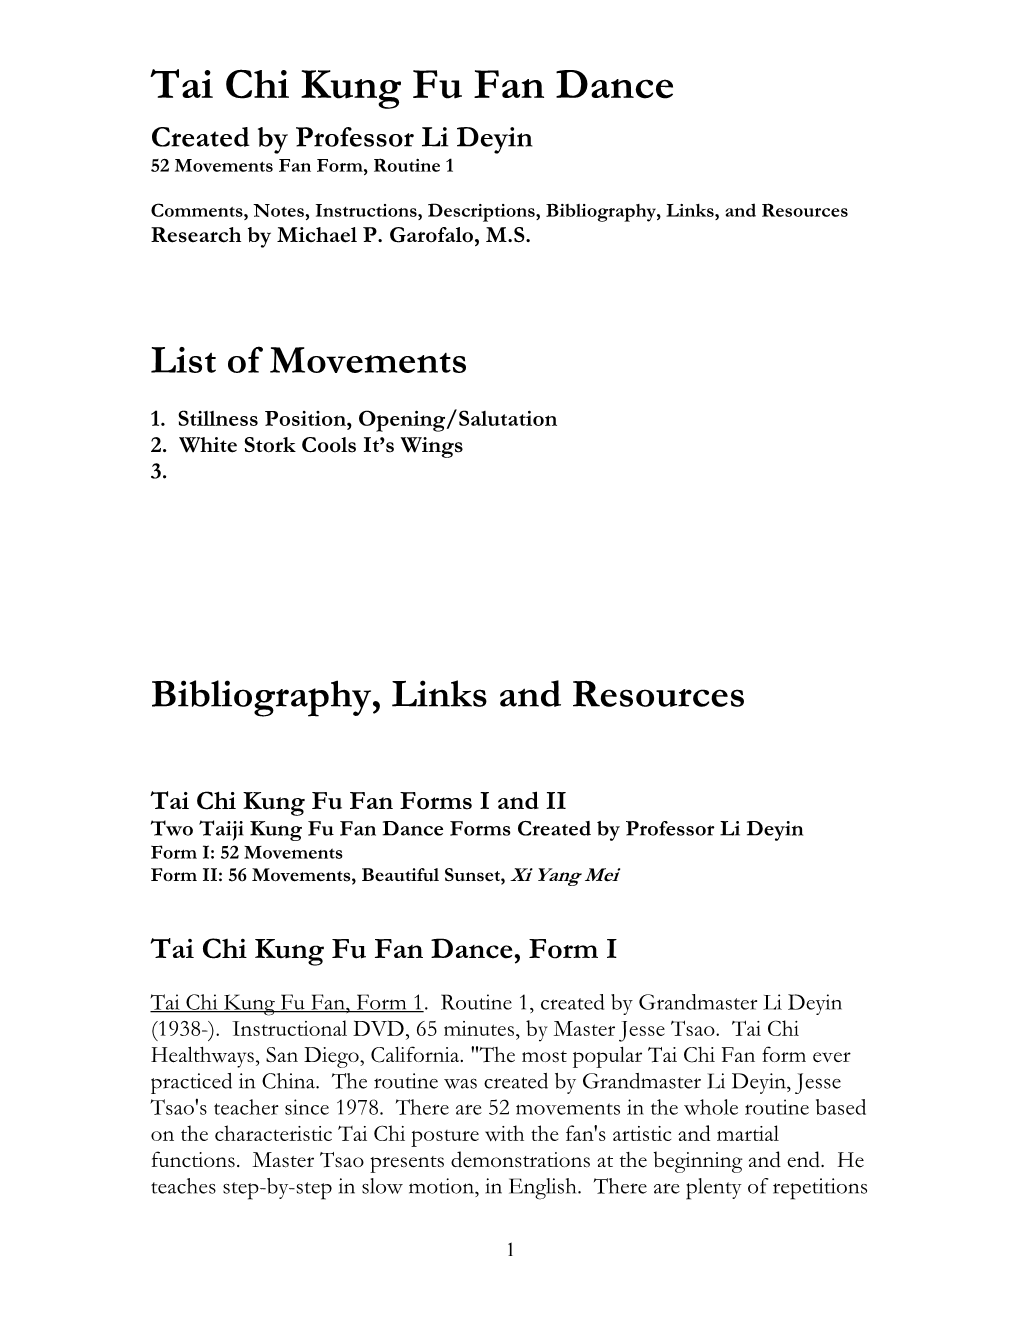 Tai Chi Kung Fu Fan Dance by Li Deyin: List of Movements, Notes, Bibliography, Resources